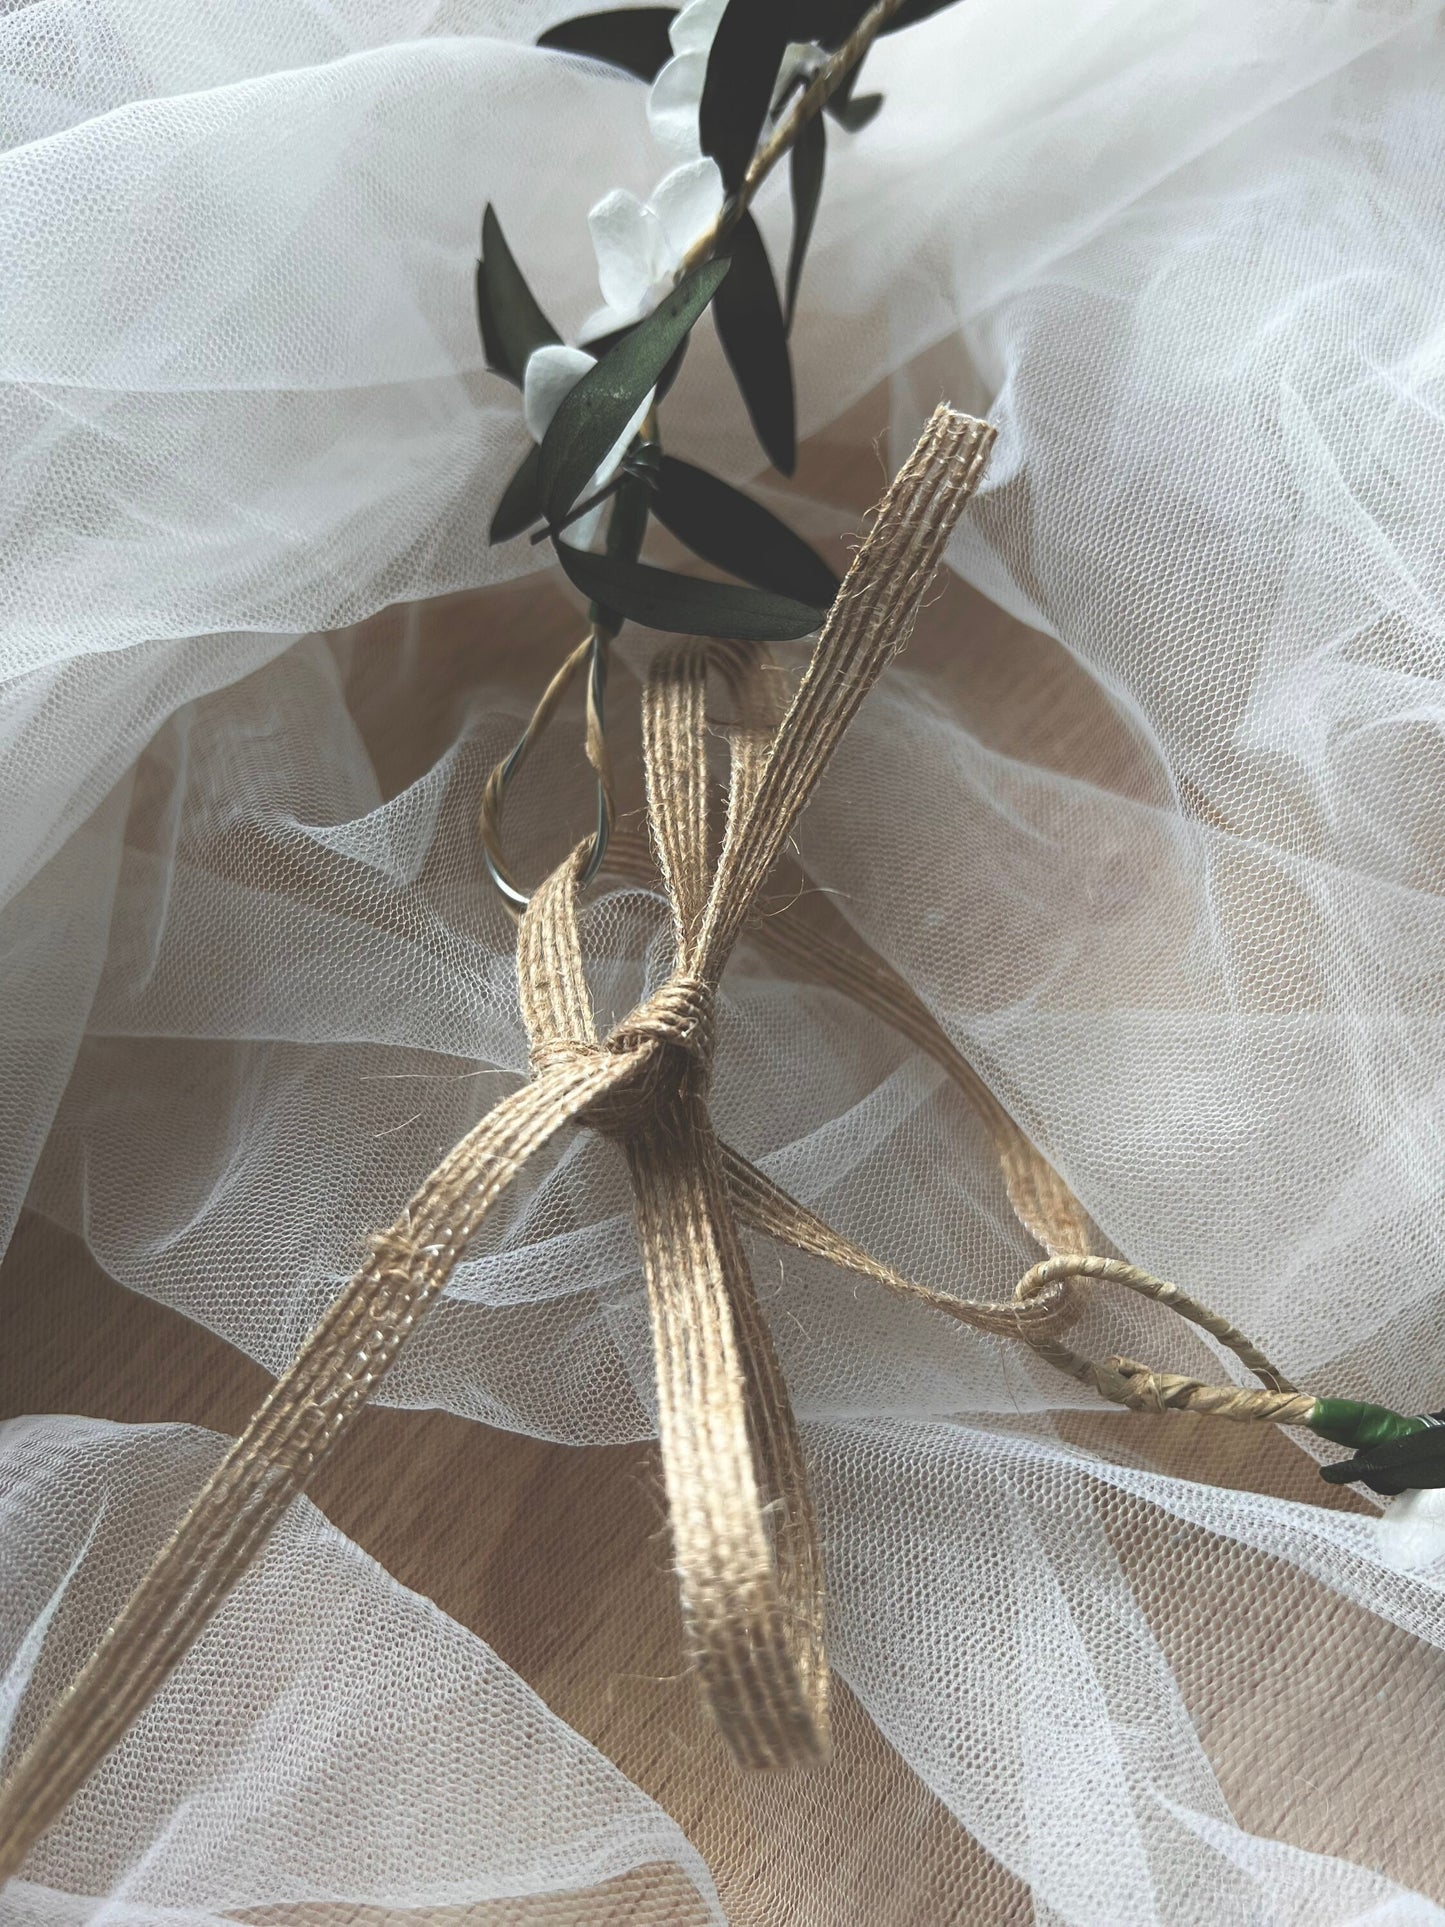 White And Green Wedding Flower Headband, Eucalyptus Minimal Tiny Hair Wreath, Tiny Bridal Dried Flower Crown Hair Piece